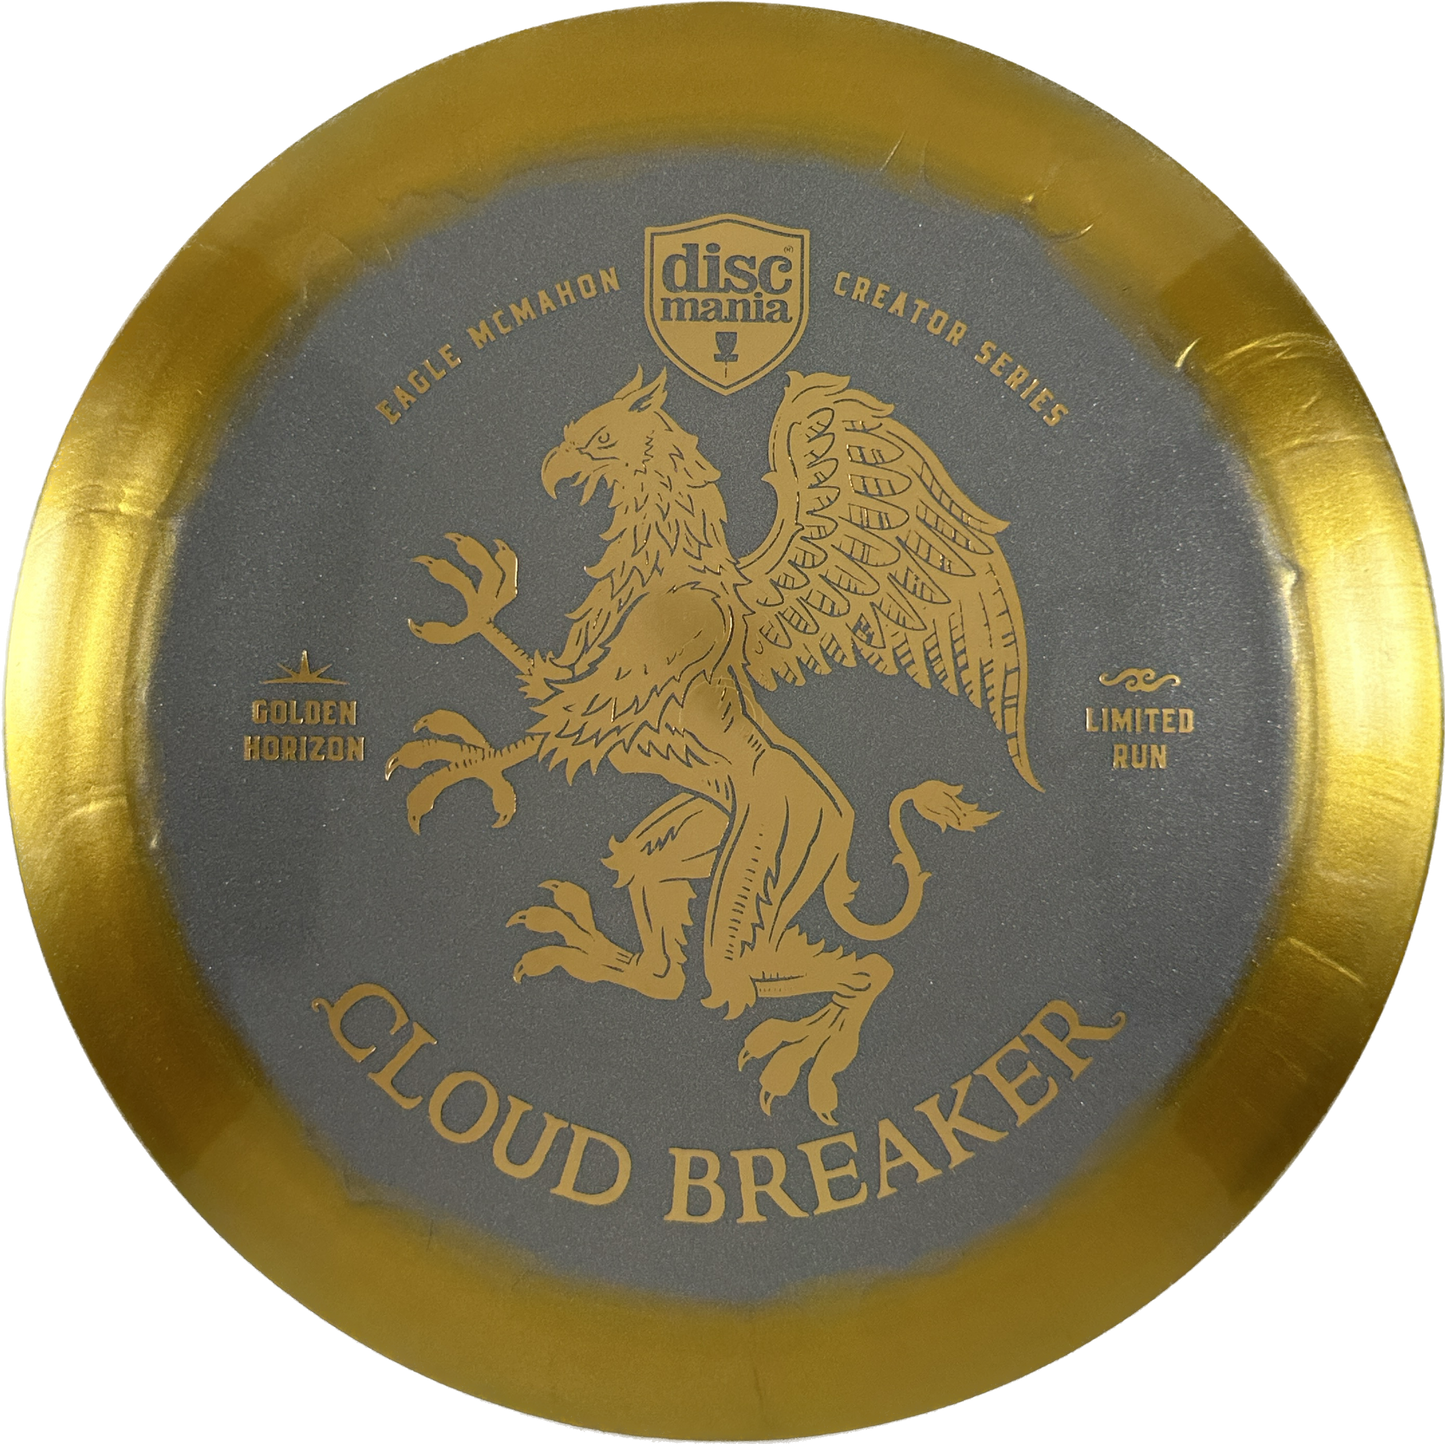 Eagle McMahon Creator Series Golden Horizon Cloud Breaker